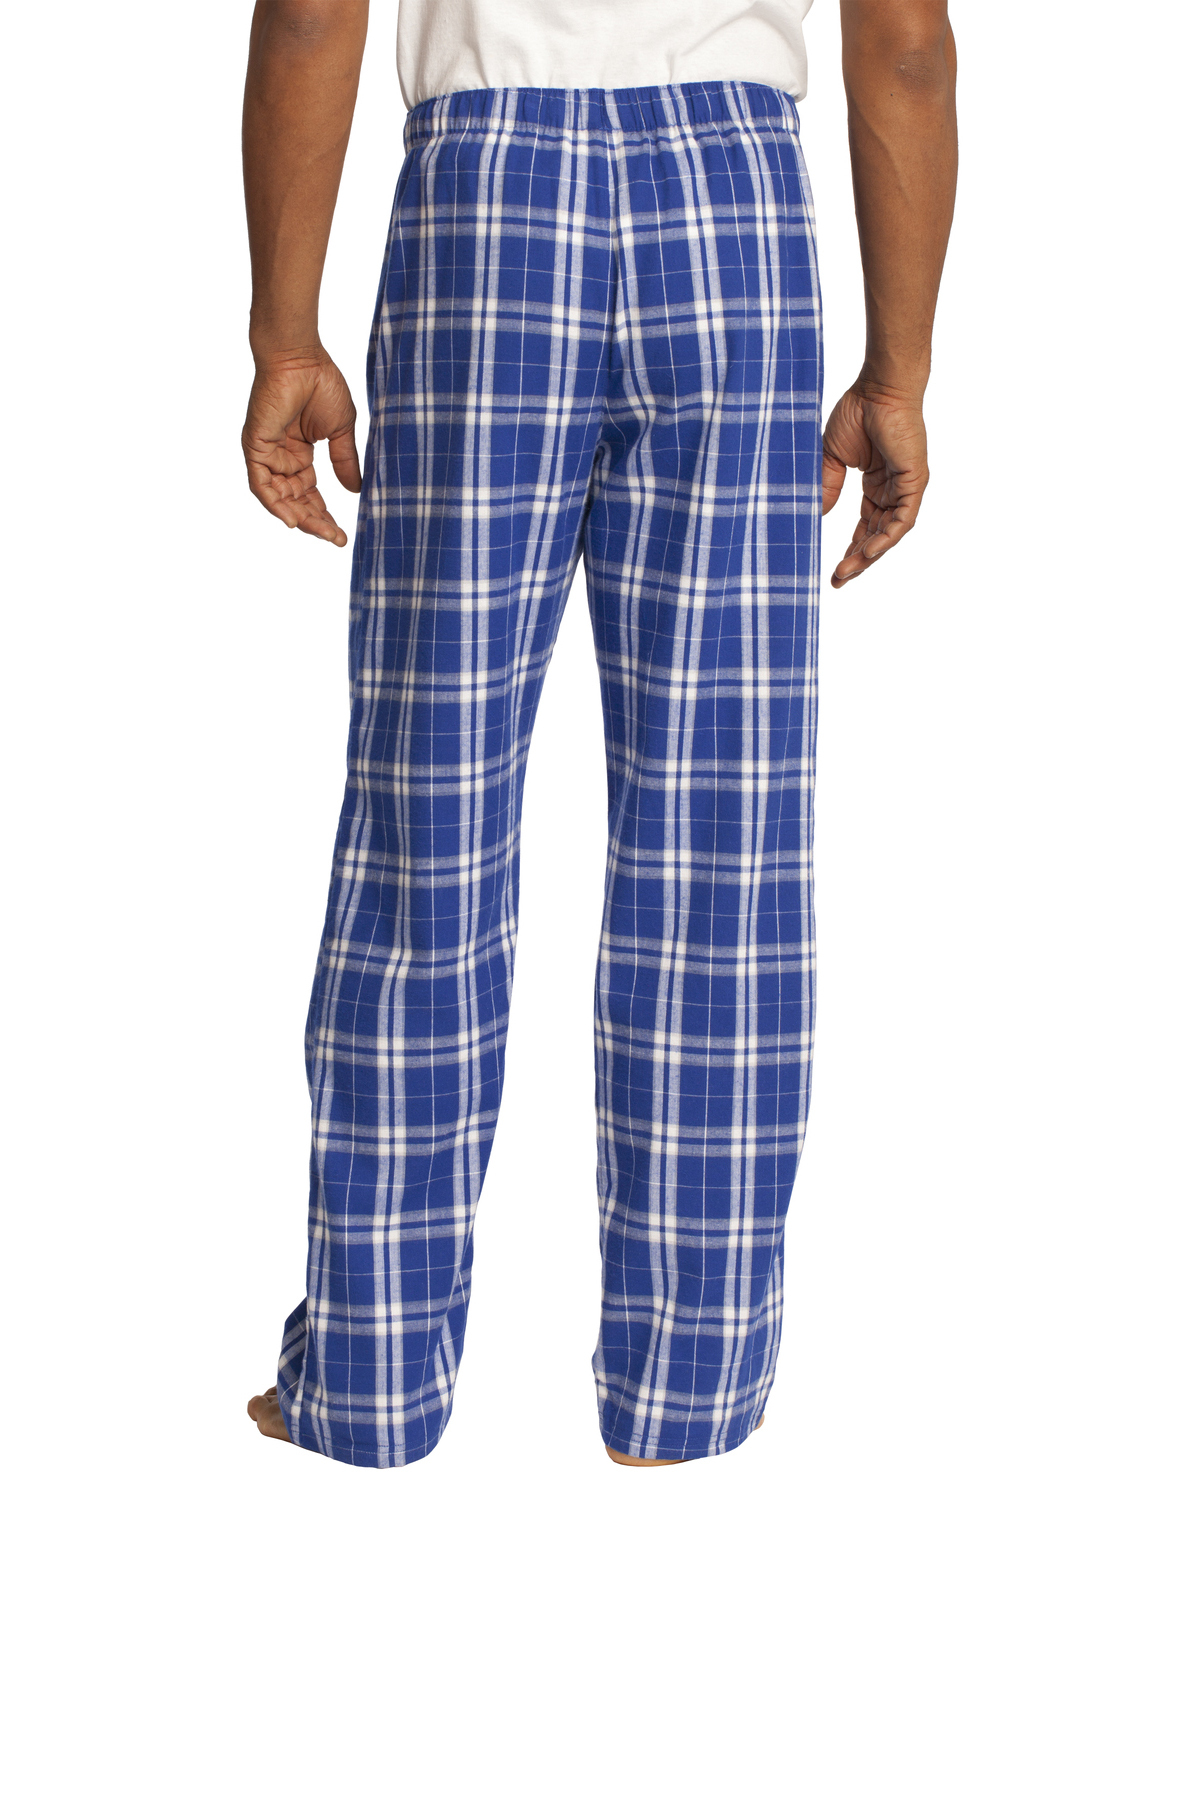 Flannel pyjama bottoms  BlackWhite checked  Ladies  HM IN